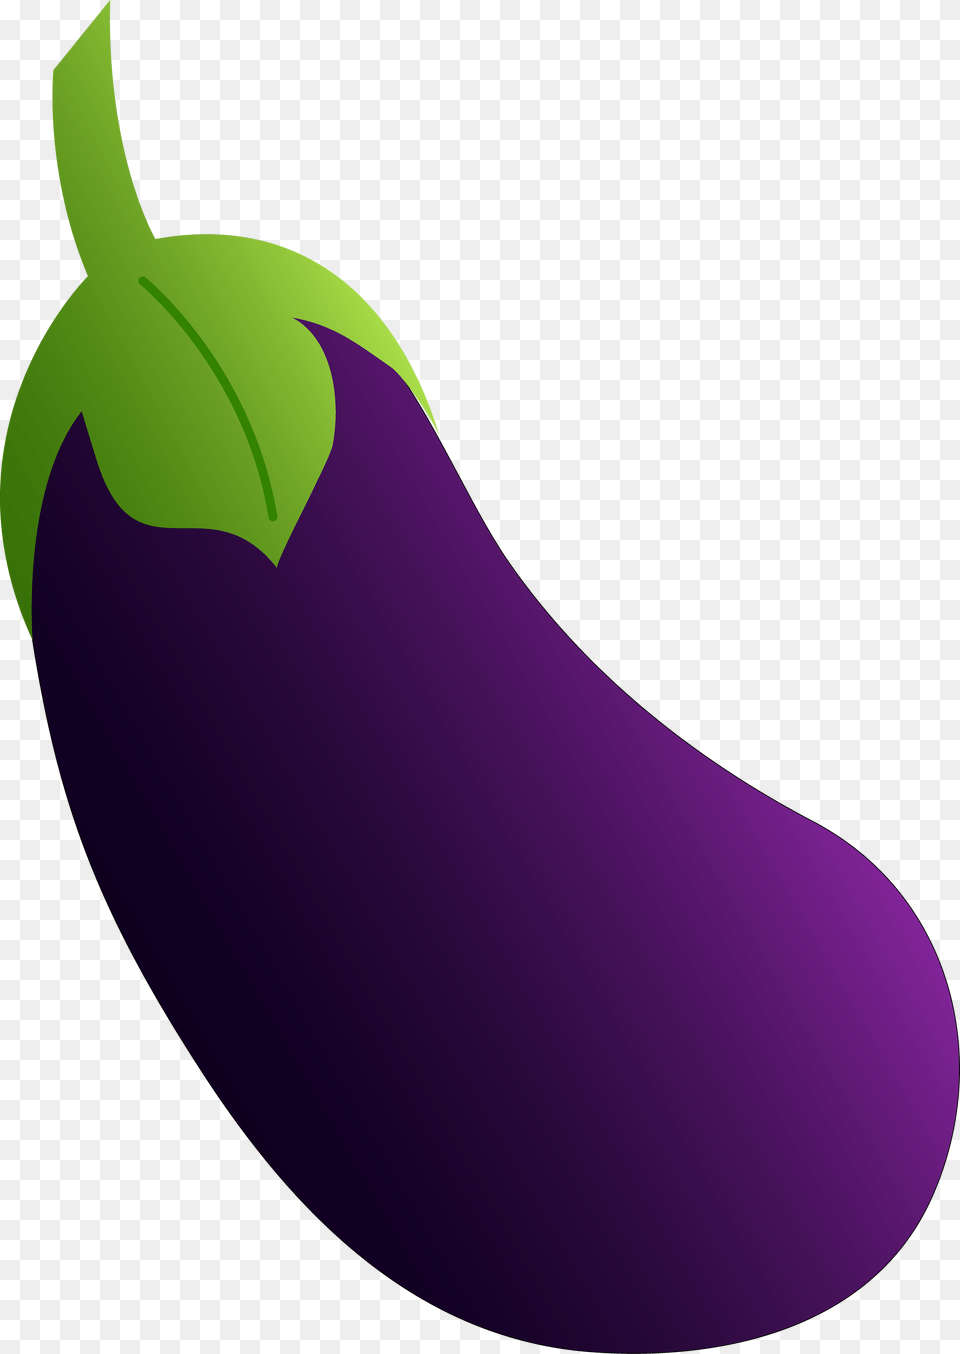 Eggplant Images Download, Food, Produce, Plant, Vegetable Png Image